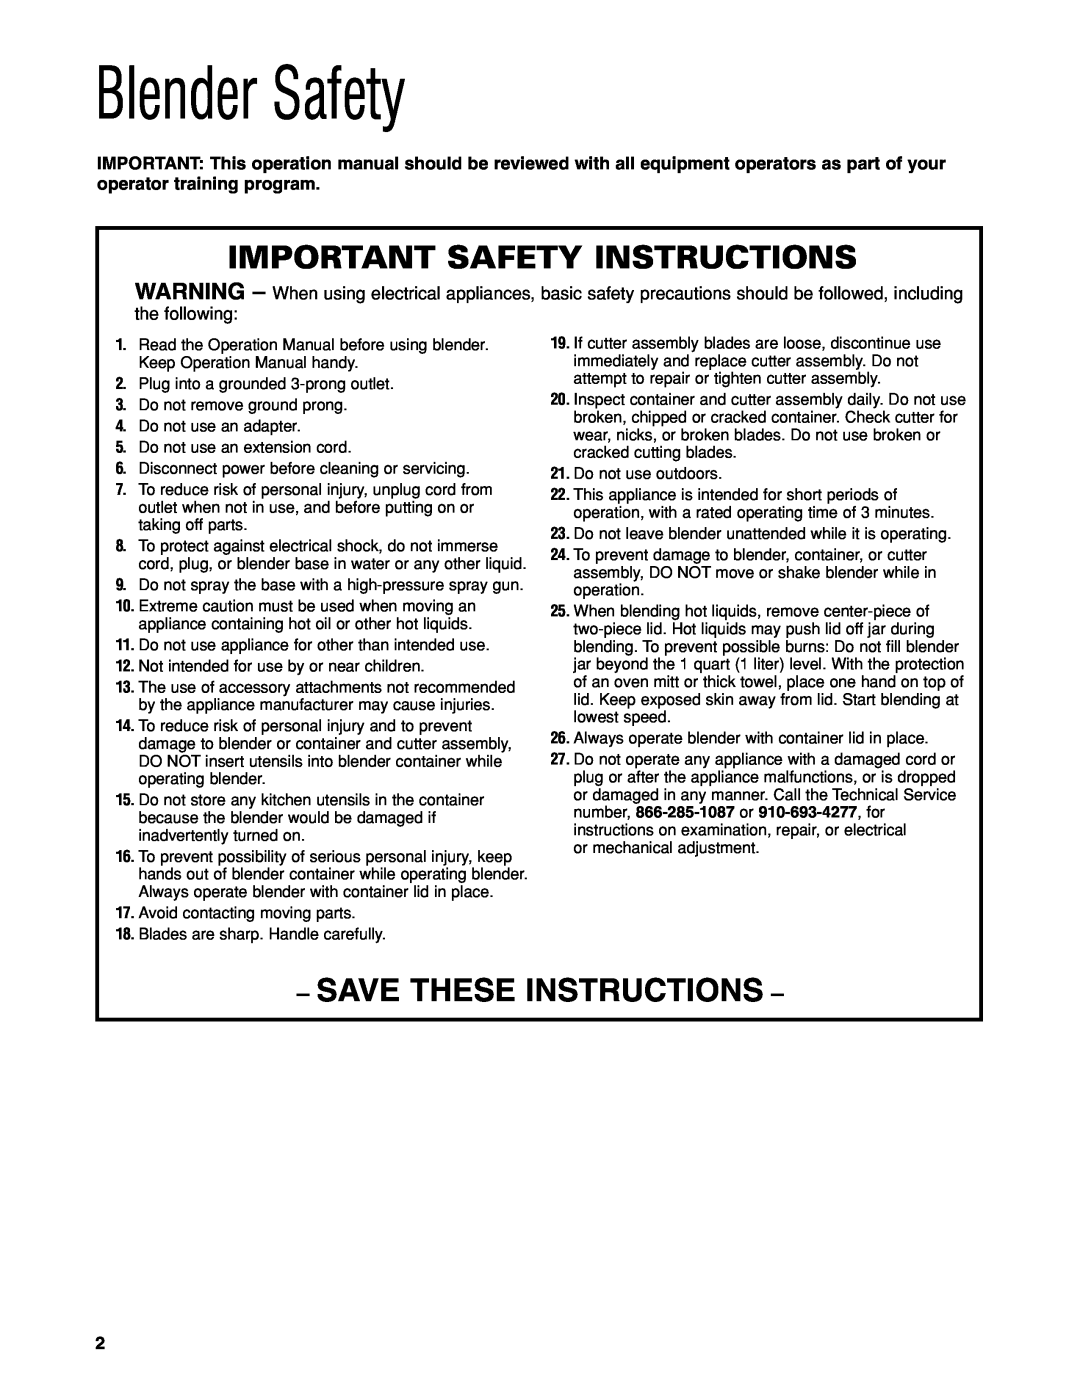 Hamilton Beach HBH450 manuel dutilisation Blender Safety, Important Safety Instructions, Save These Instructions 